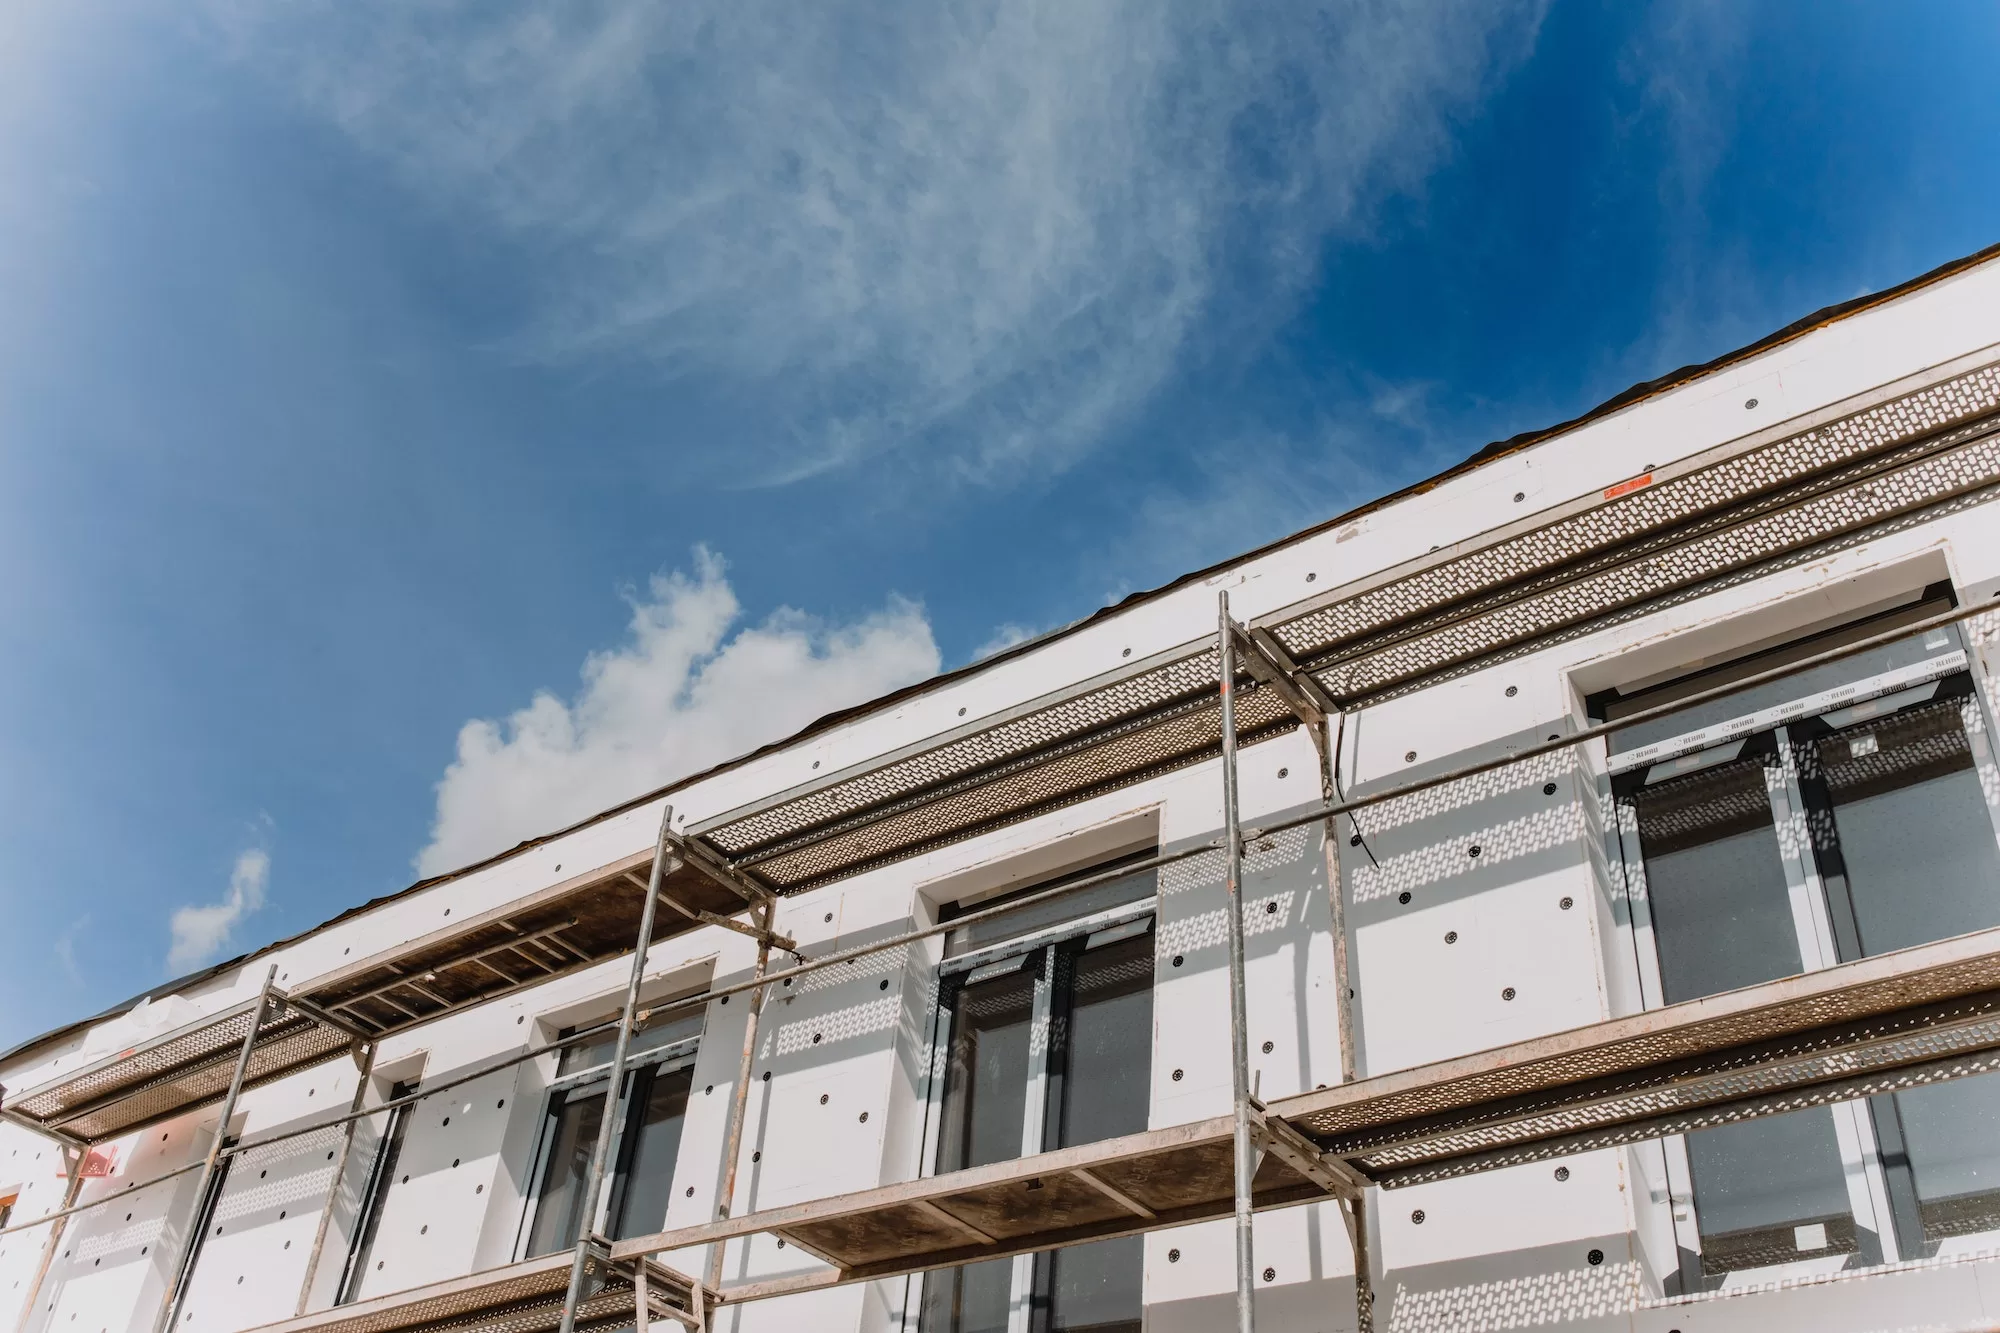 scaffolding on house facade,modern building under construction -